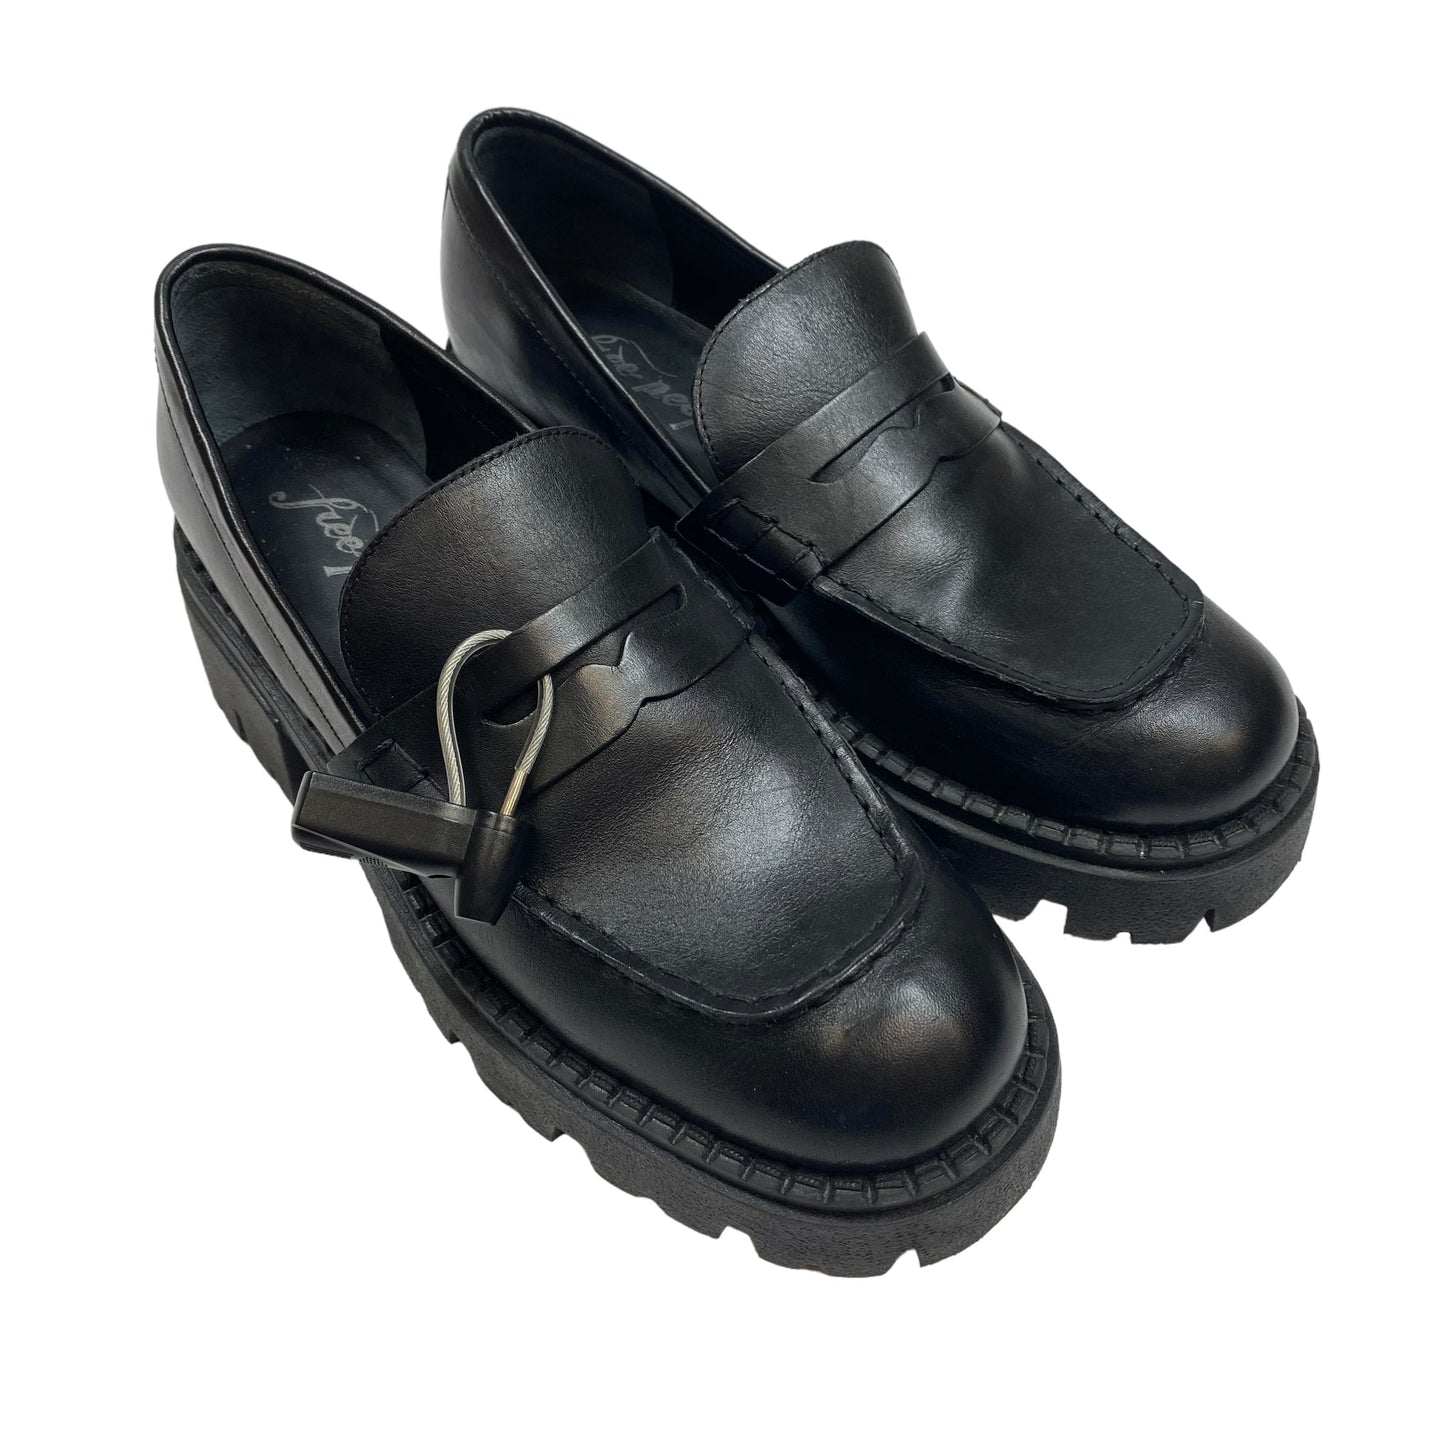 Black Shoes Heels Block Free People, Size 7.5